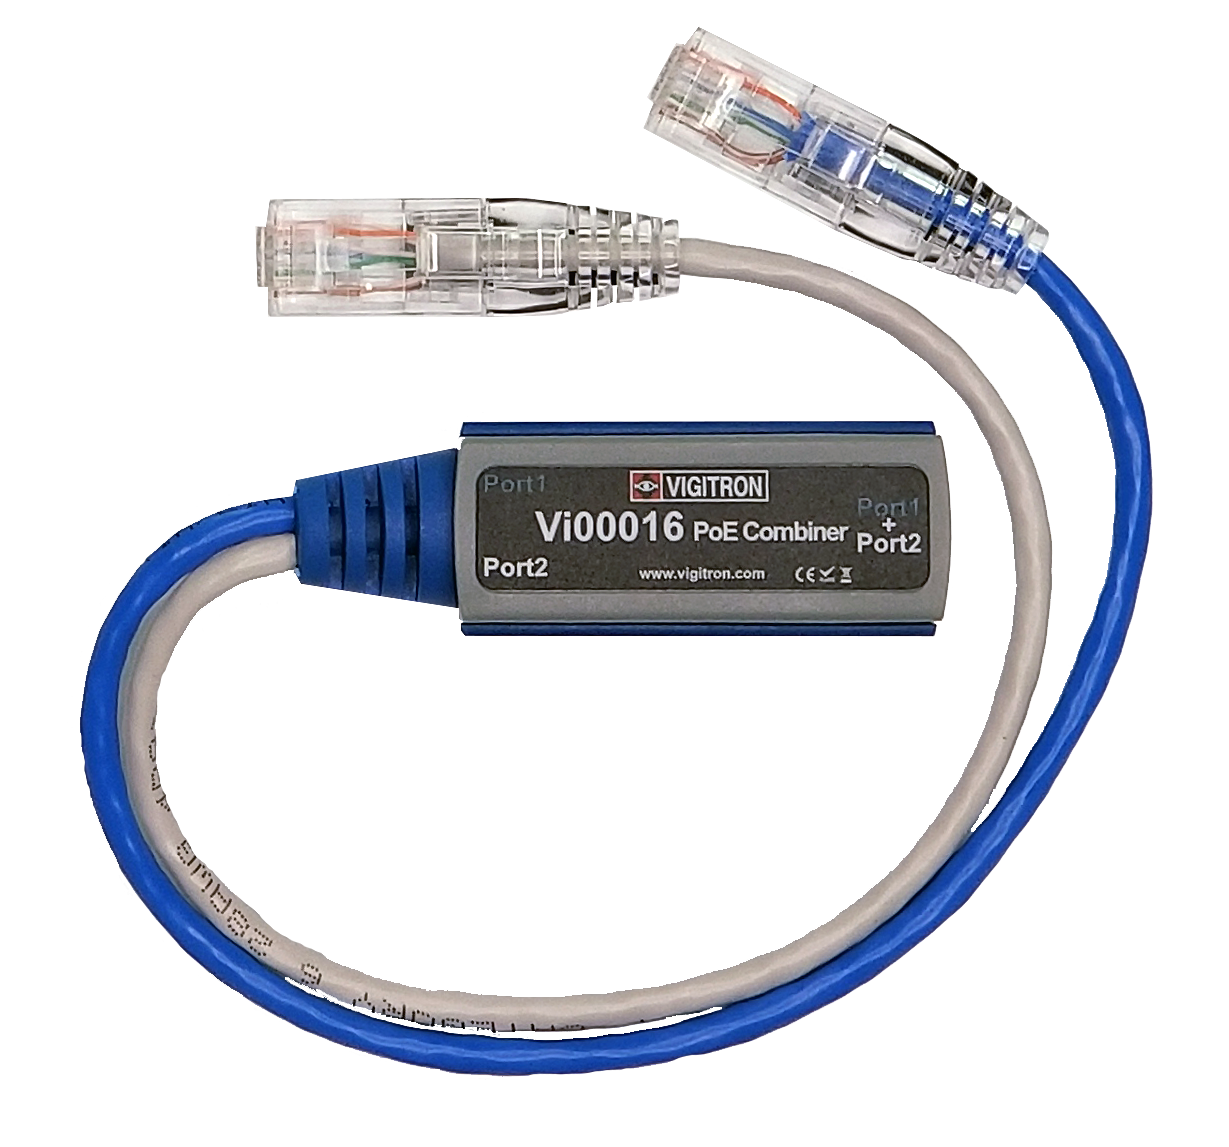 Vigitron Vi00016 Dual port PoE combiner up to 74W